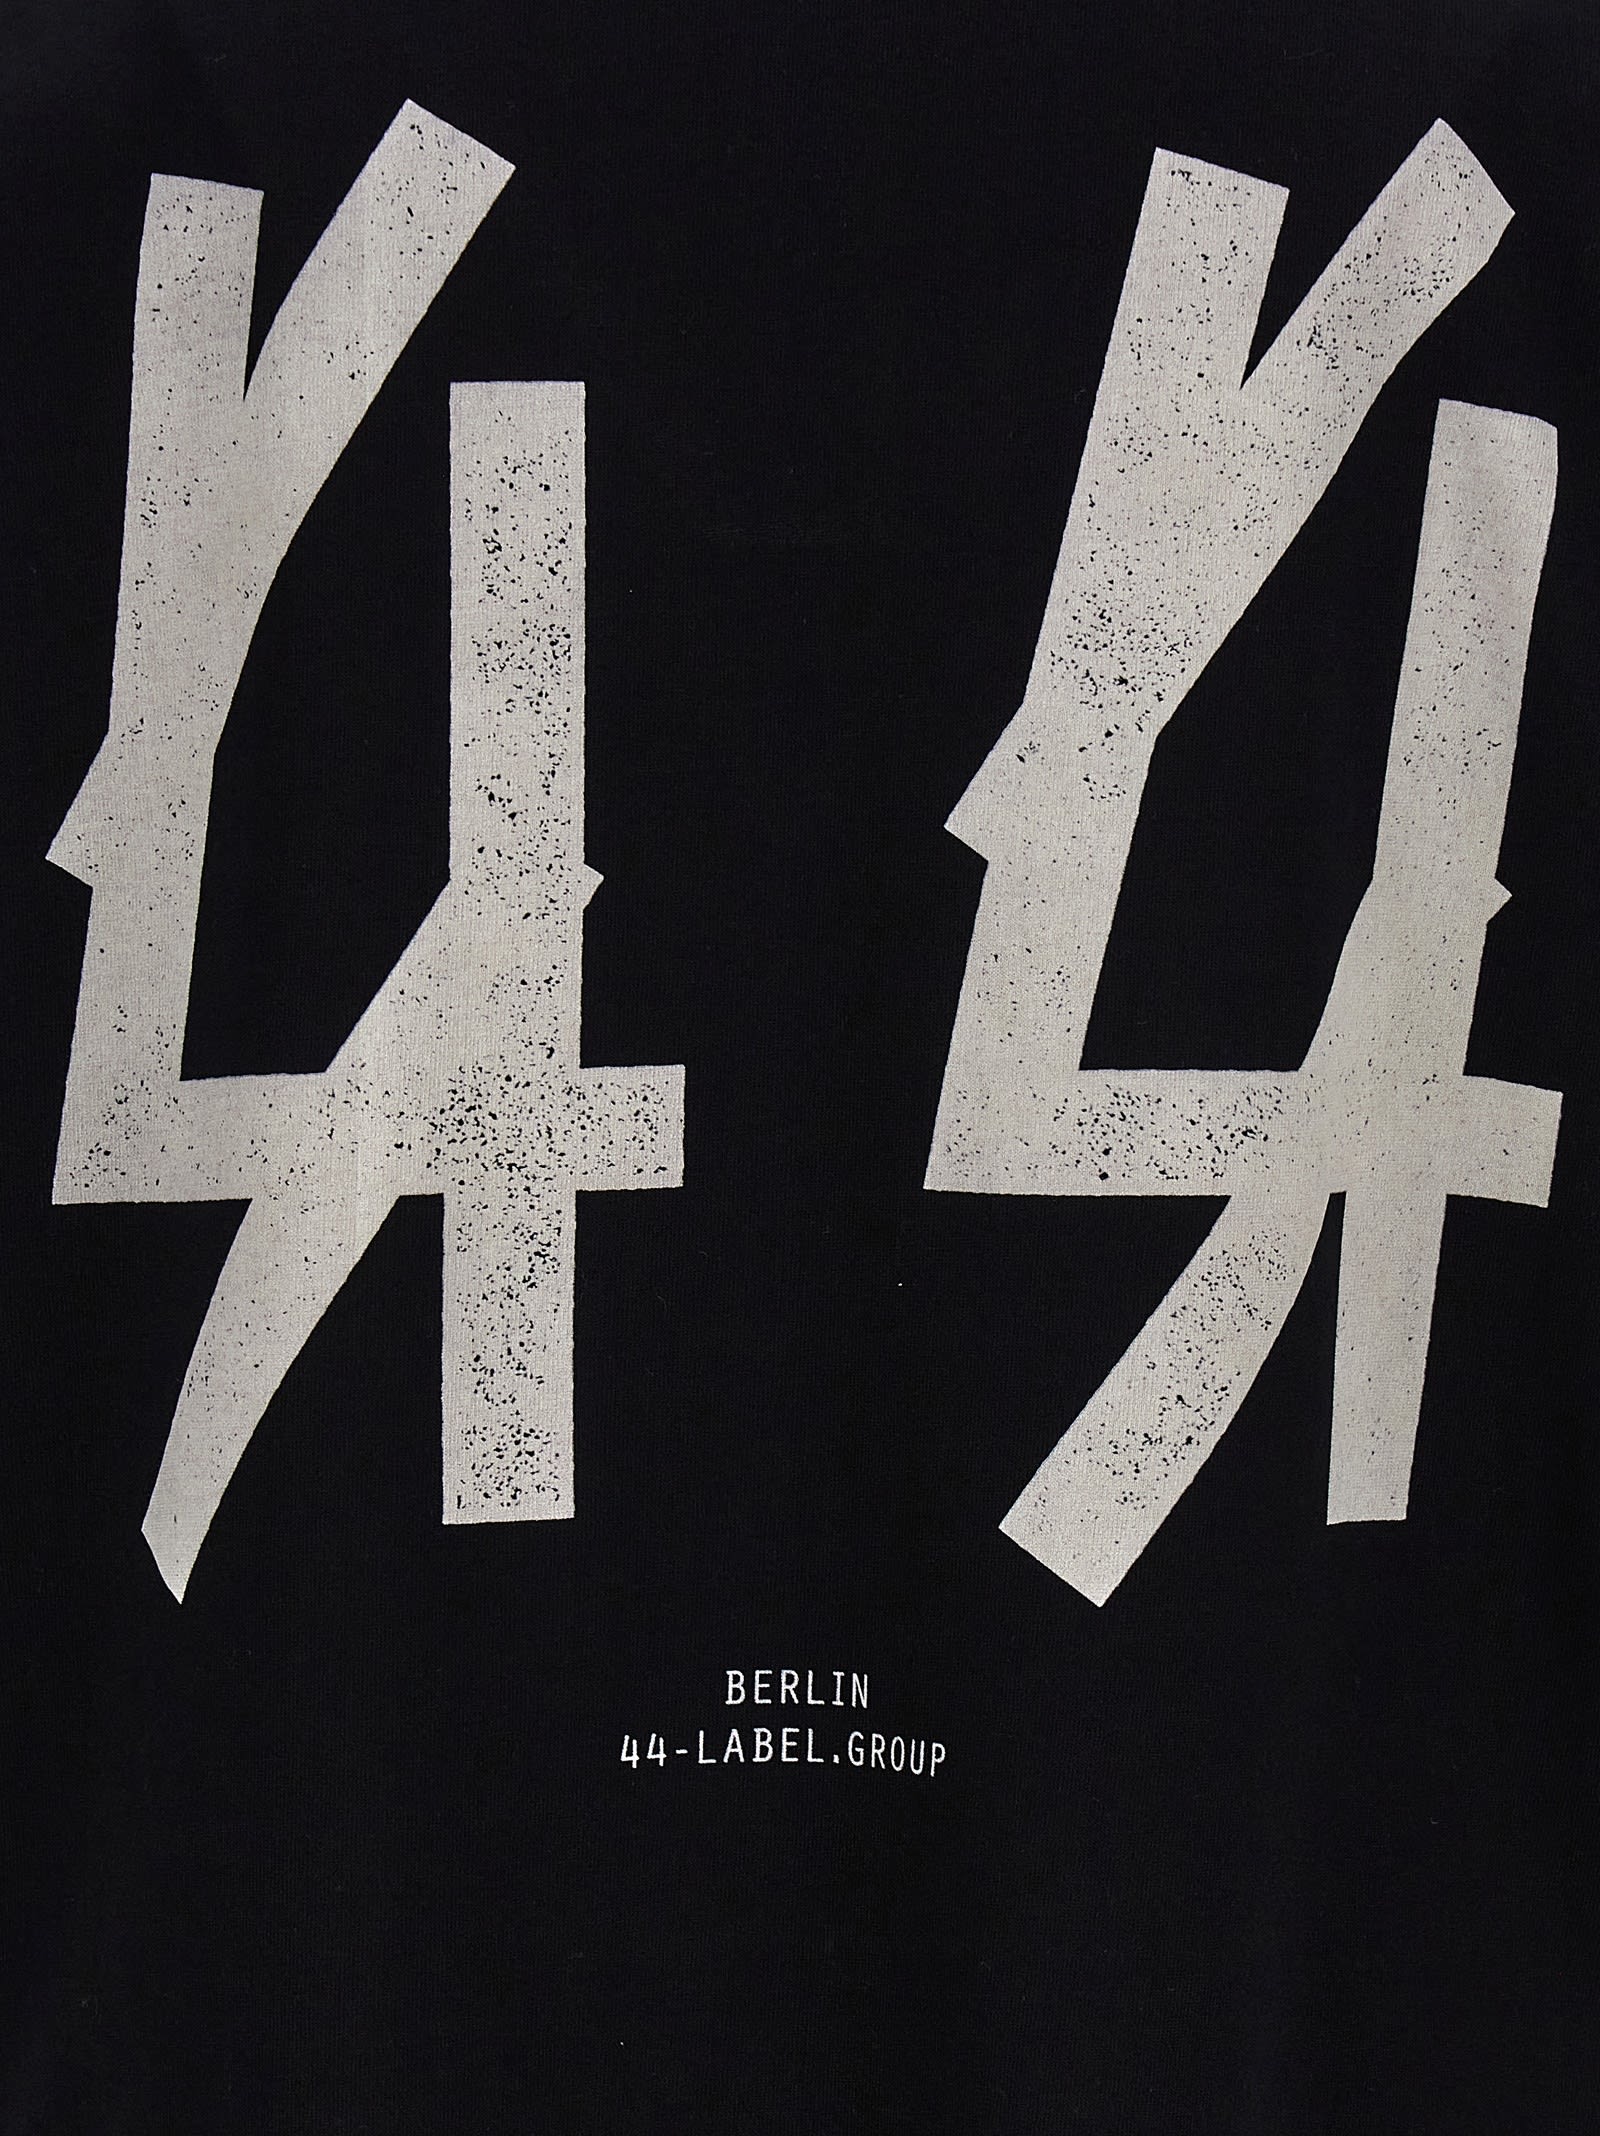 Shop 44 Label Group T-shirt Guestlist/berlin Sub In Black